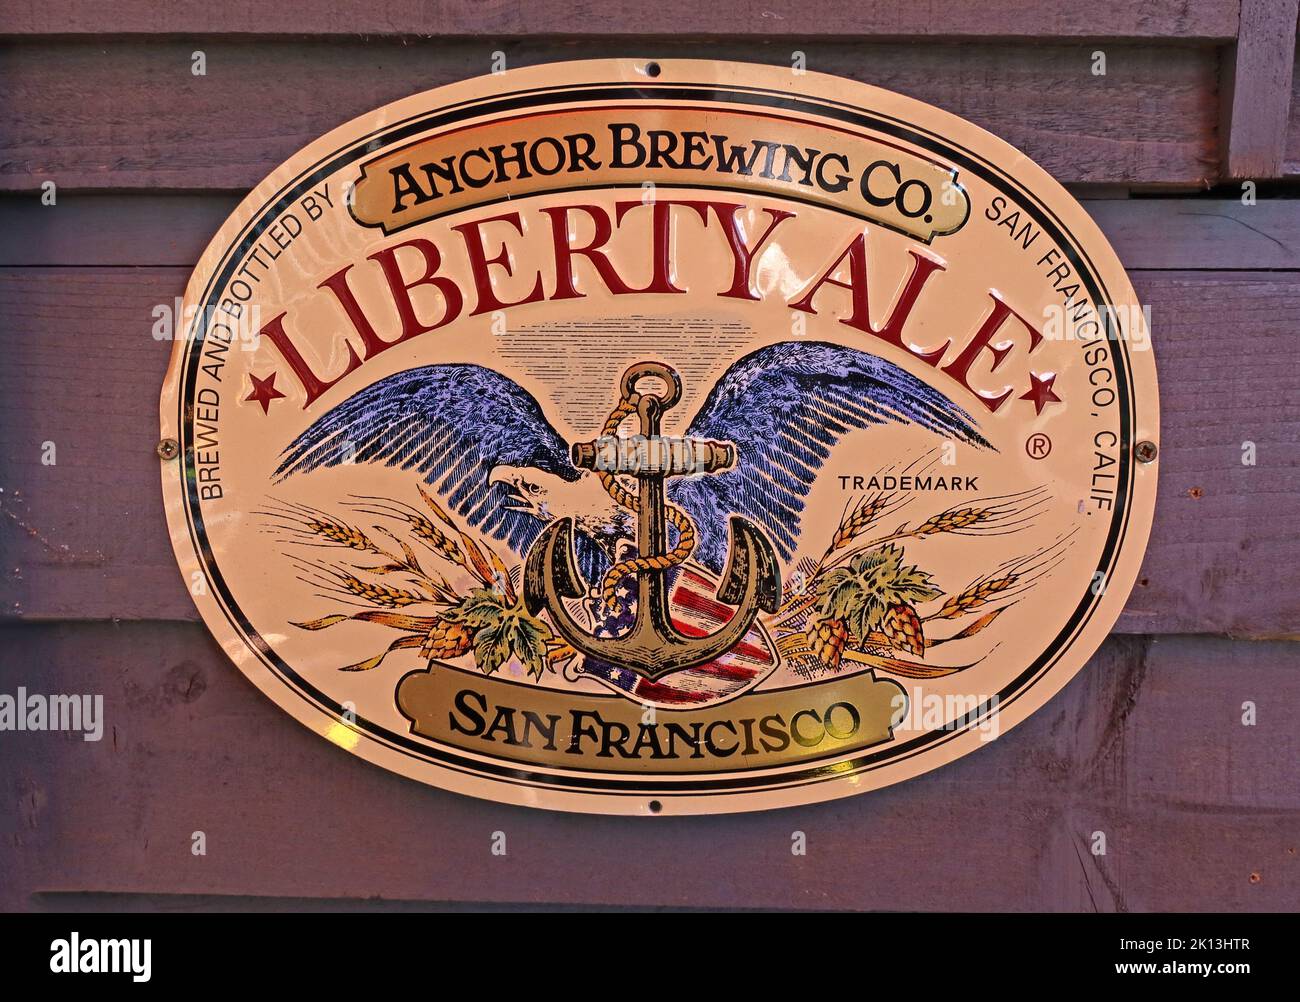 Anchor Brewing Co, Liberty Ale, trademark metal advert, San Francisco, Calif, USA Stock Photo